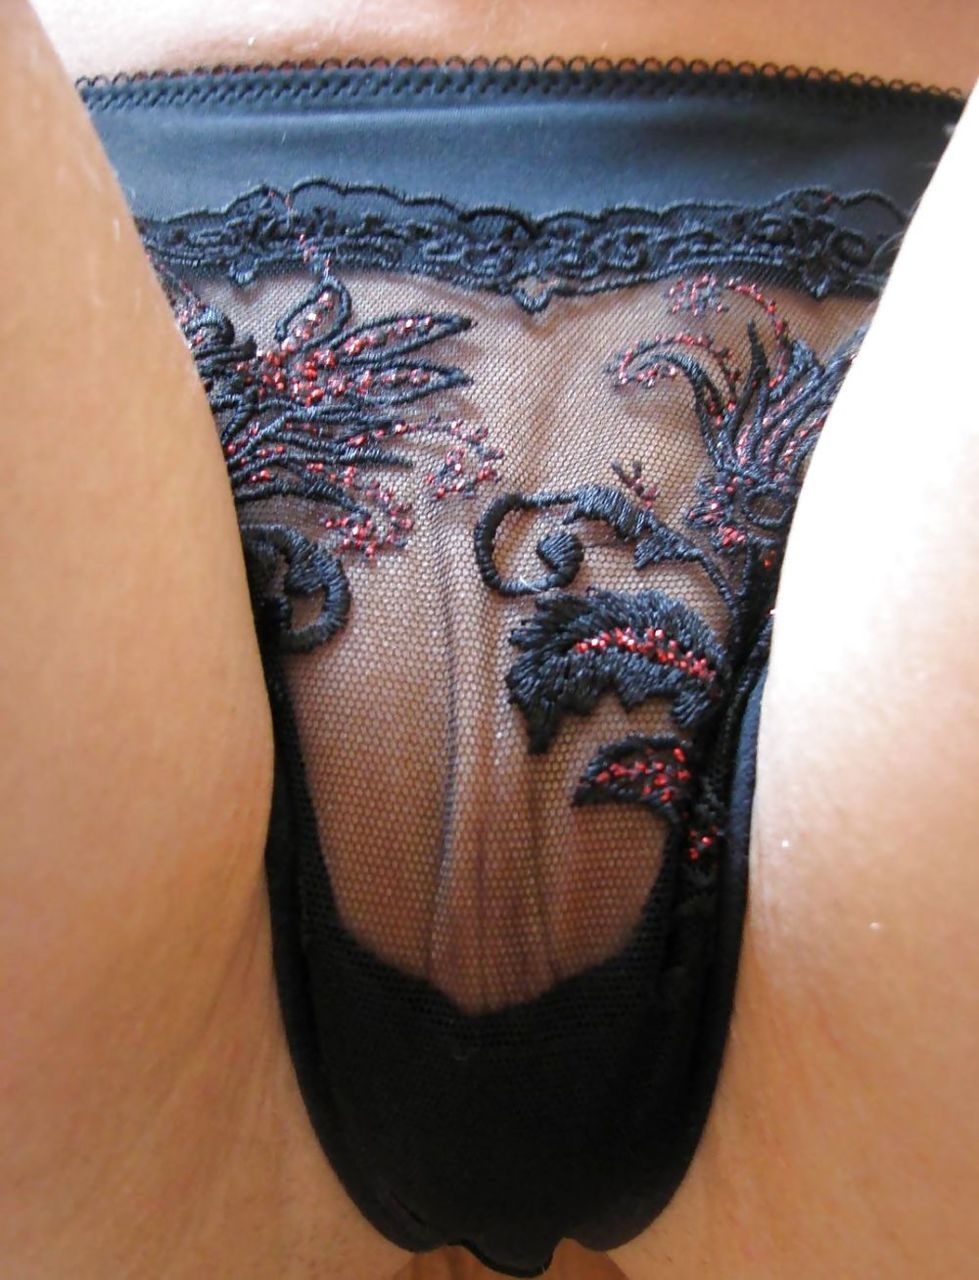 Black lace see through panties